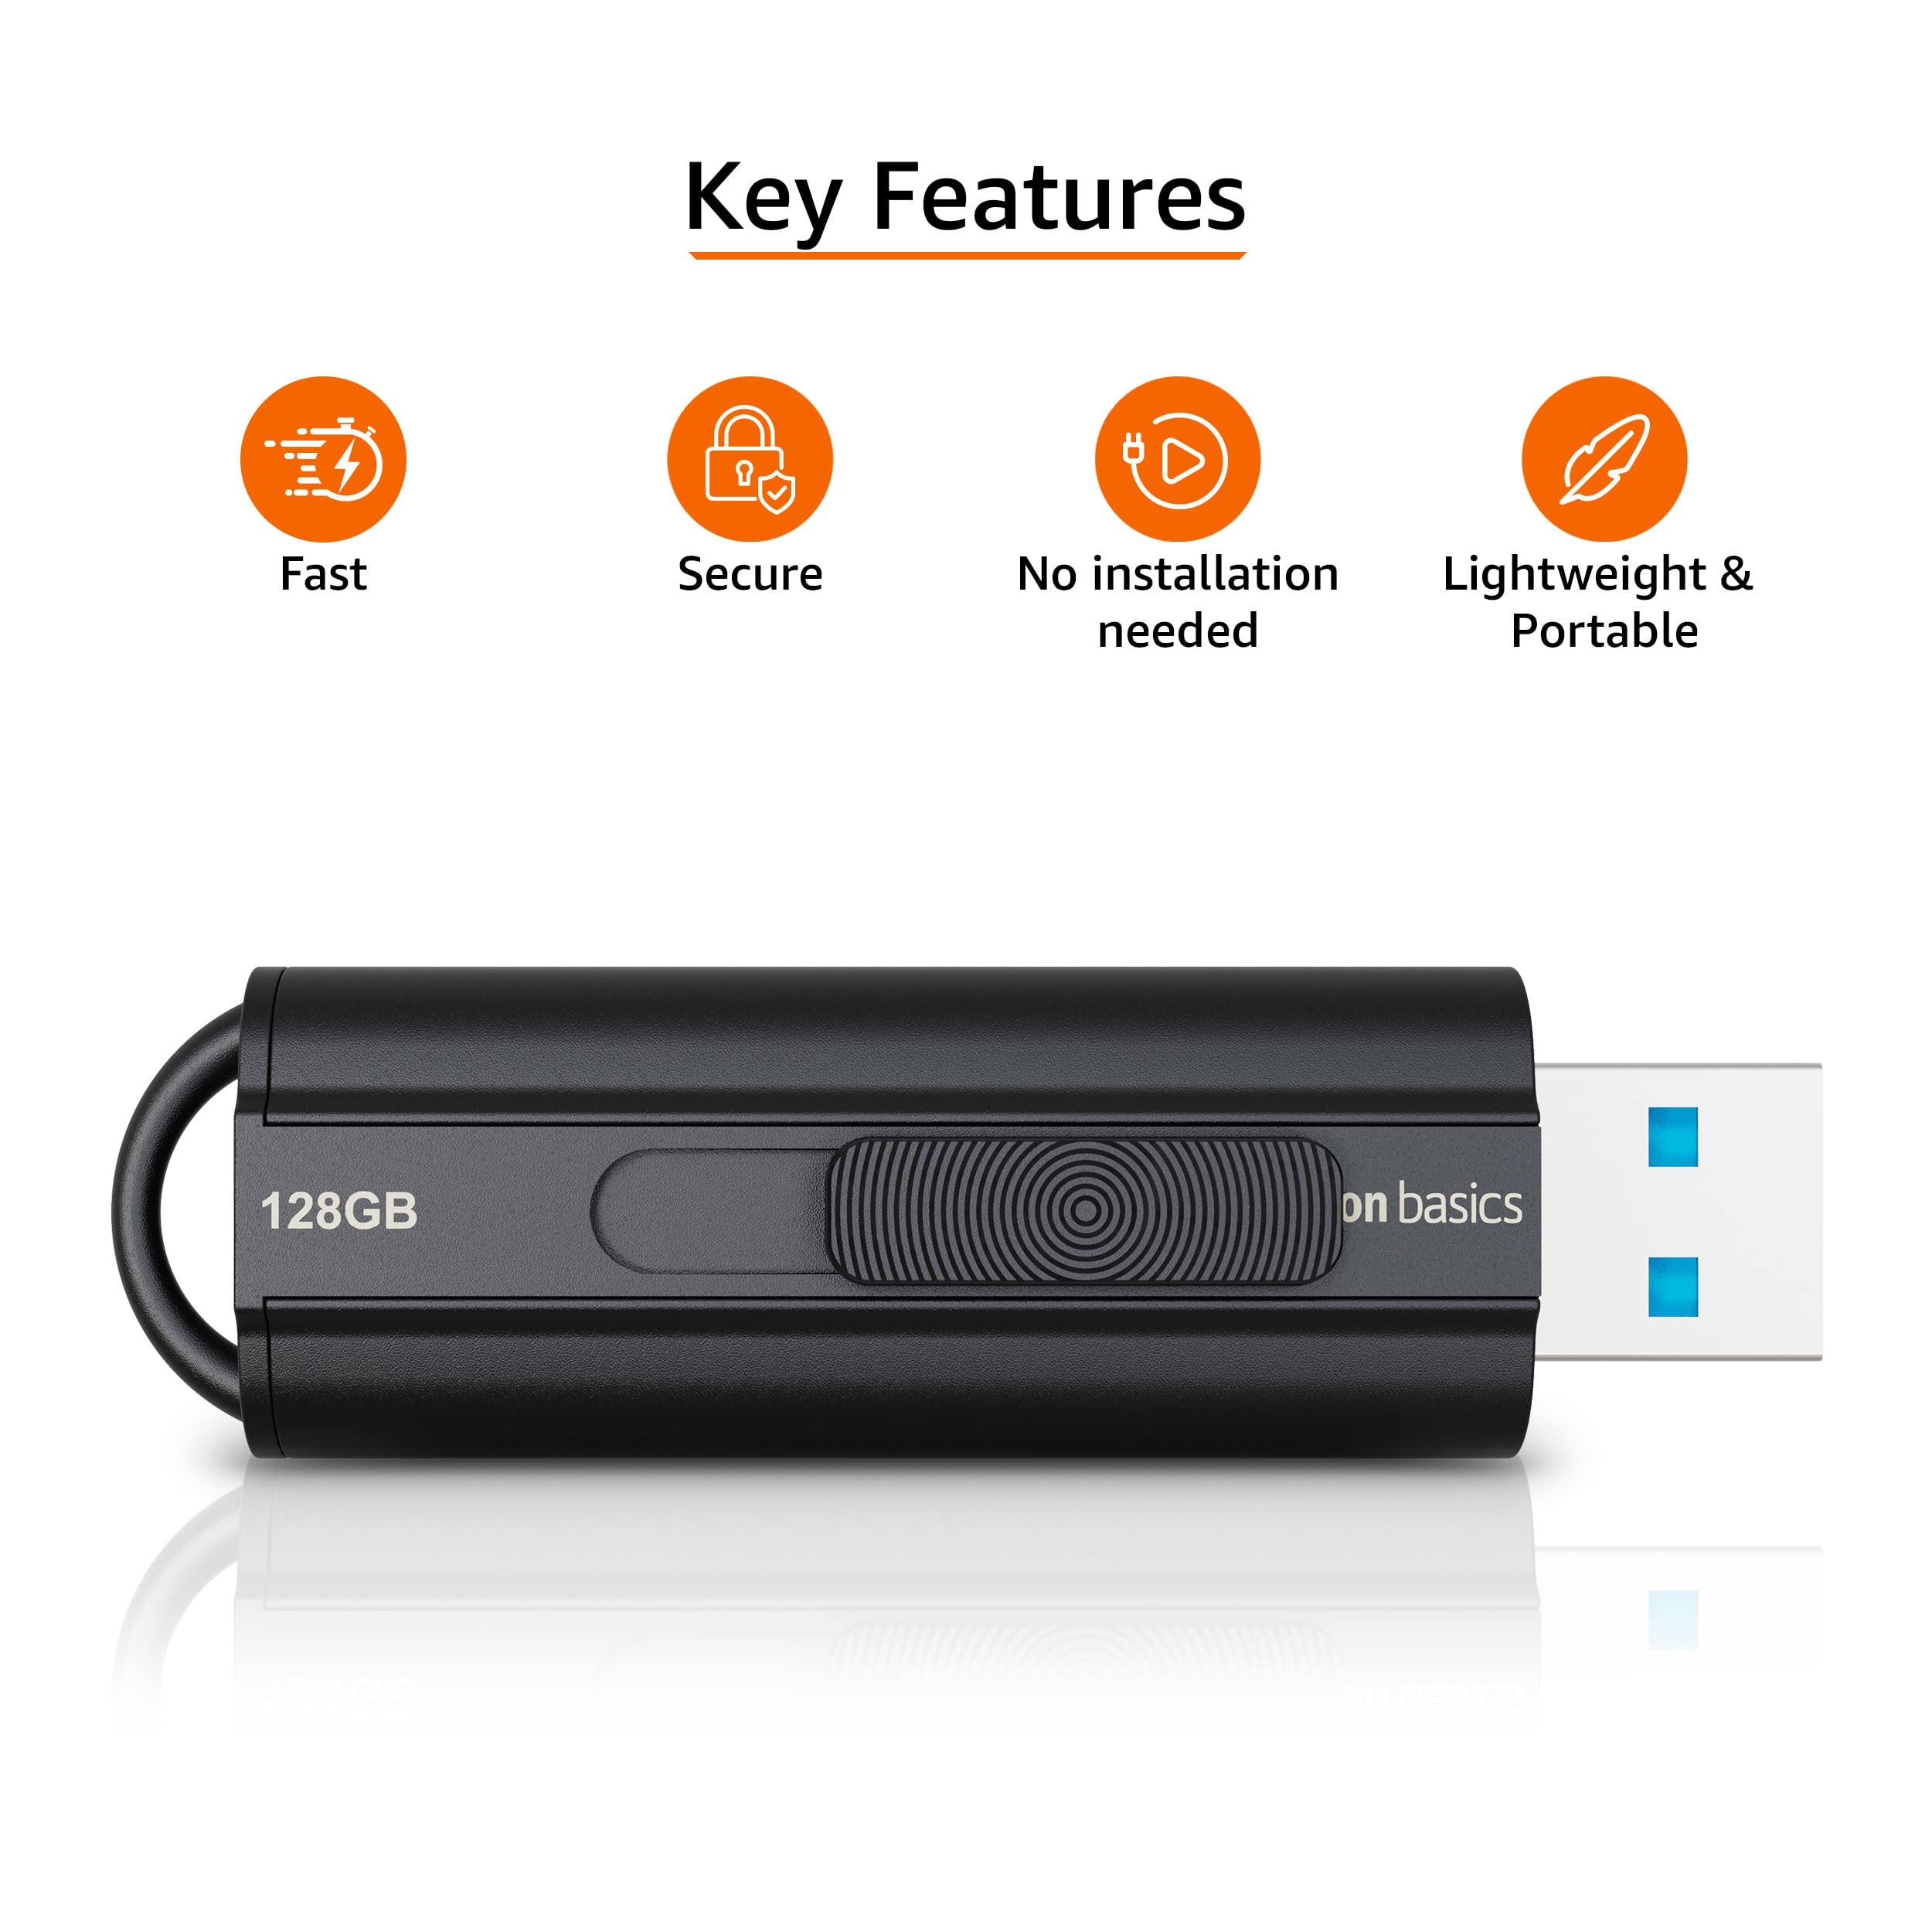 Amazon Basics 128GB Ultra Fast USB 3.1 Flash Drive, Black